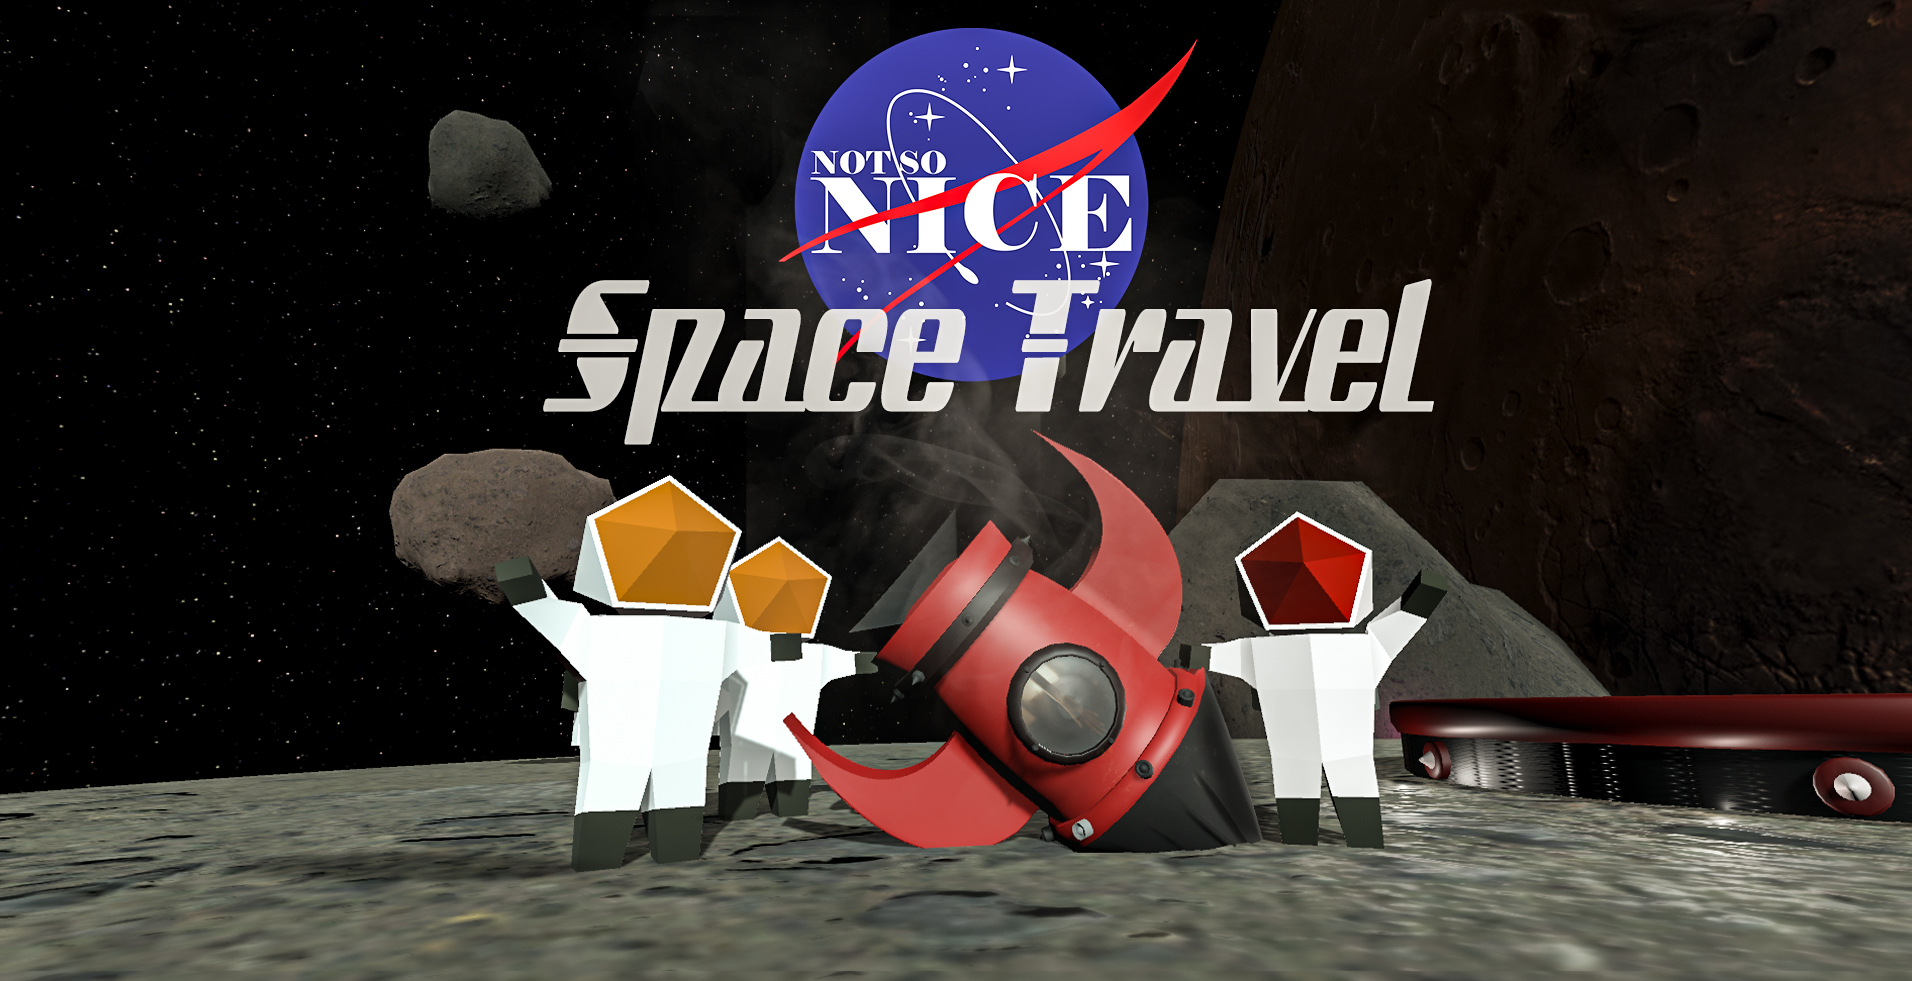 NotSoNice-Space Travel